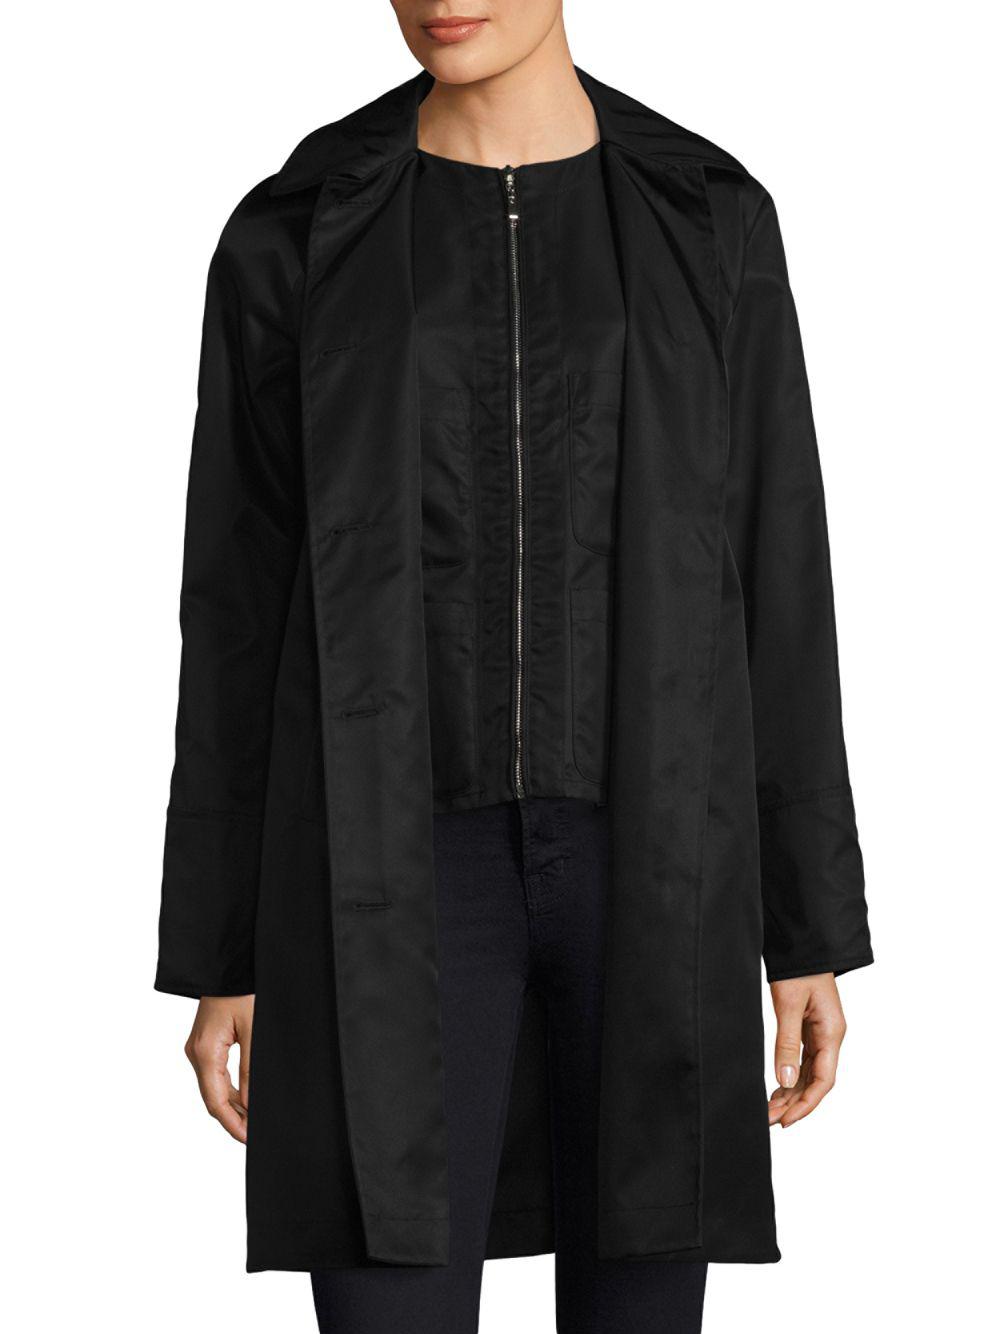 Download Jane Post Synthetic Mock Double Look Raincoat in Black - Lyst